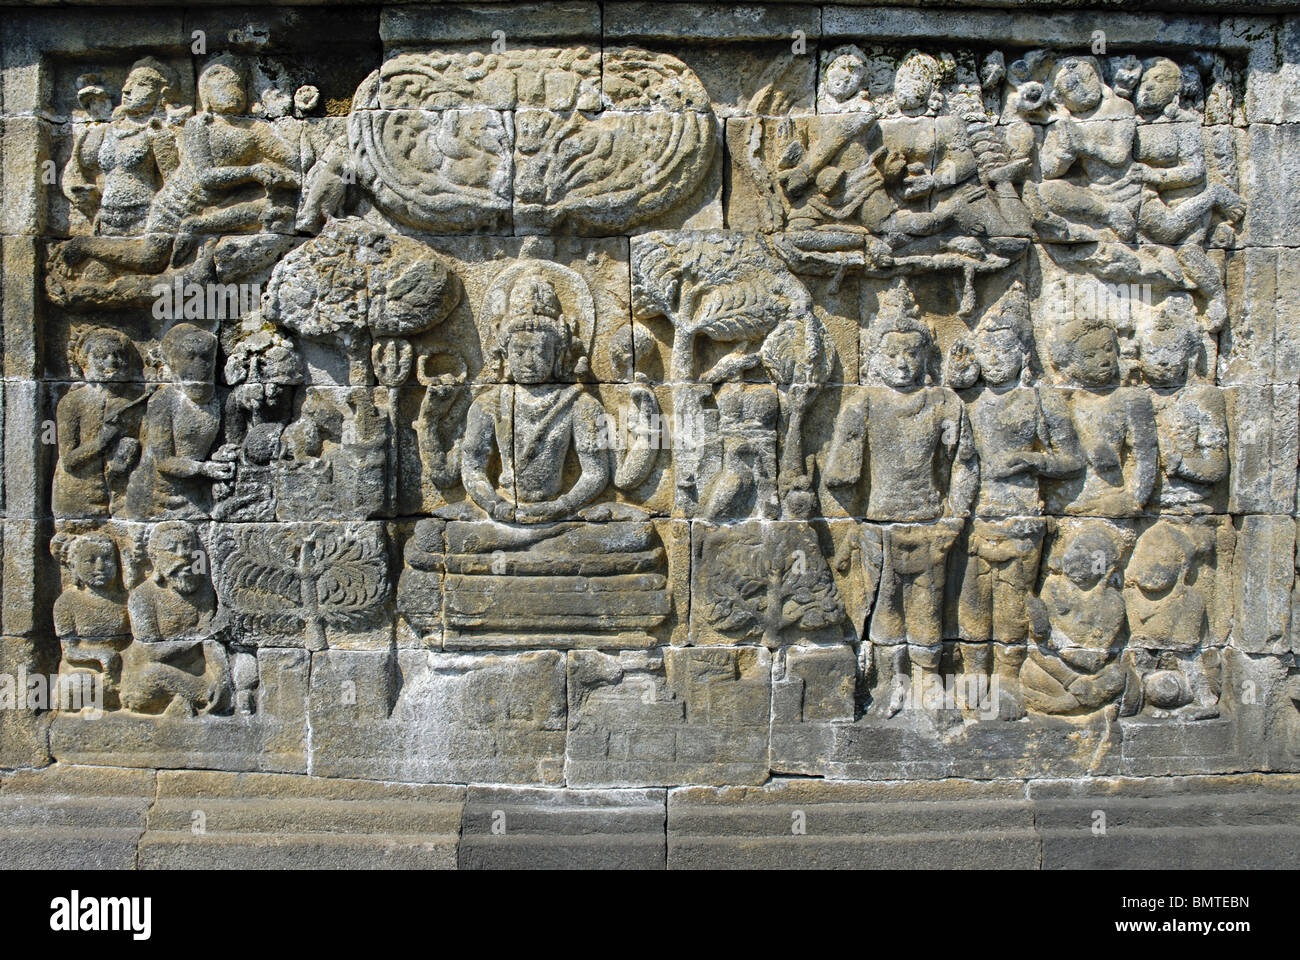 Indonesia-Java, Borobudur, Four armed Shiva/Vishnu. Seated in padmasana. 3rd gallery. Stock Photo